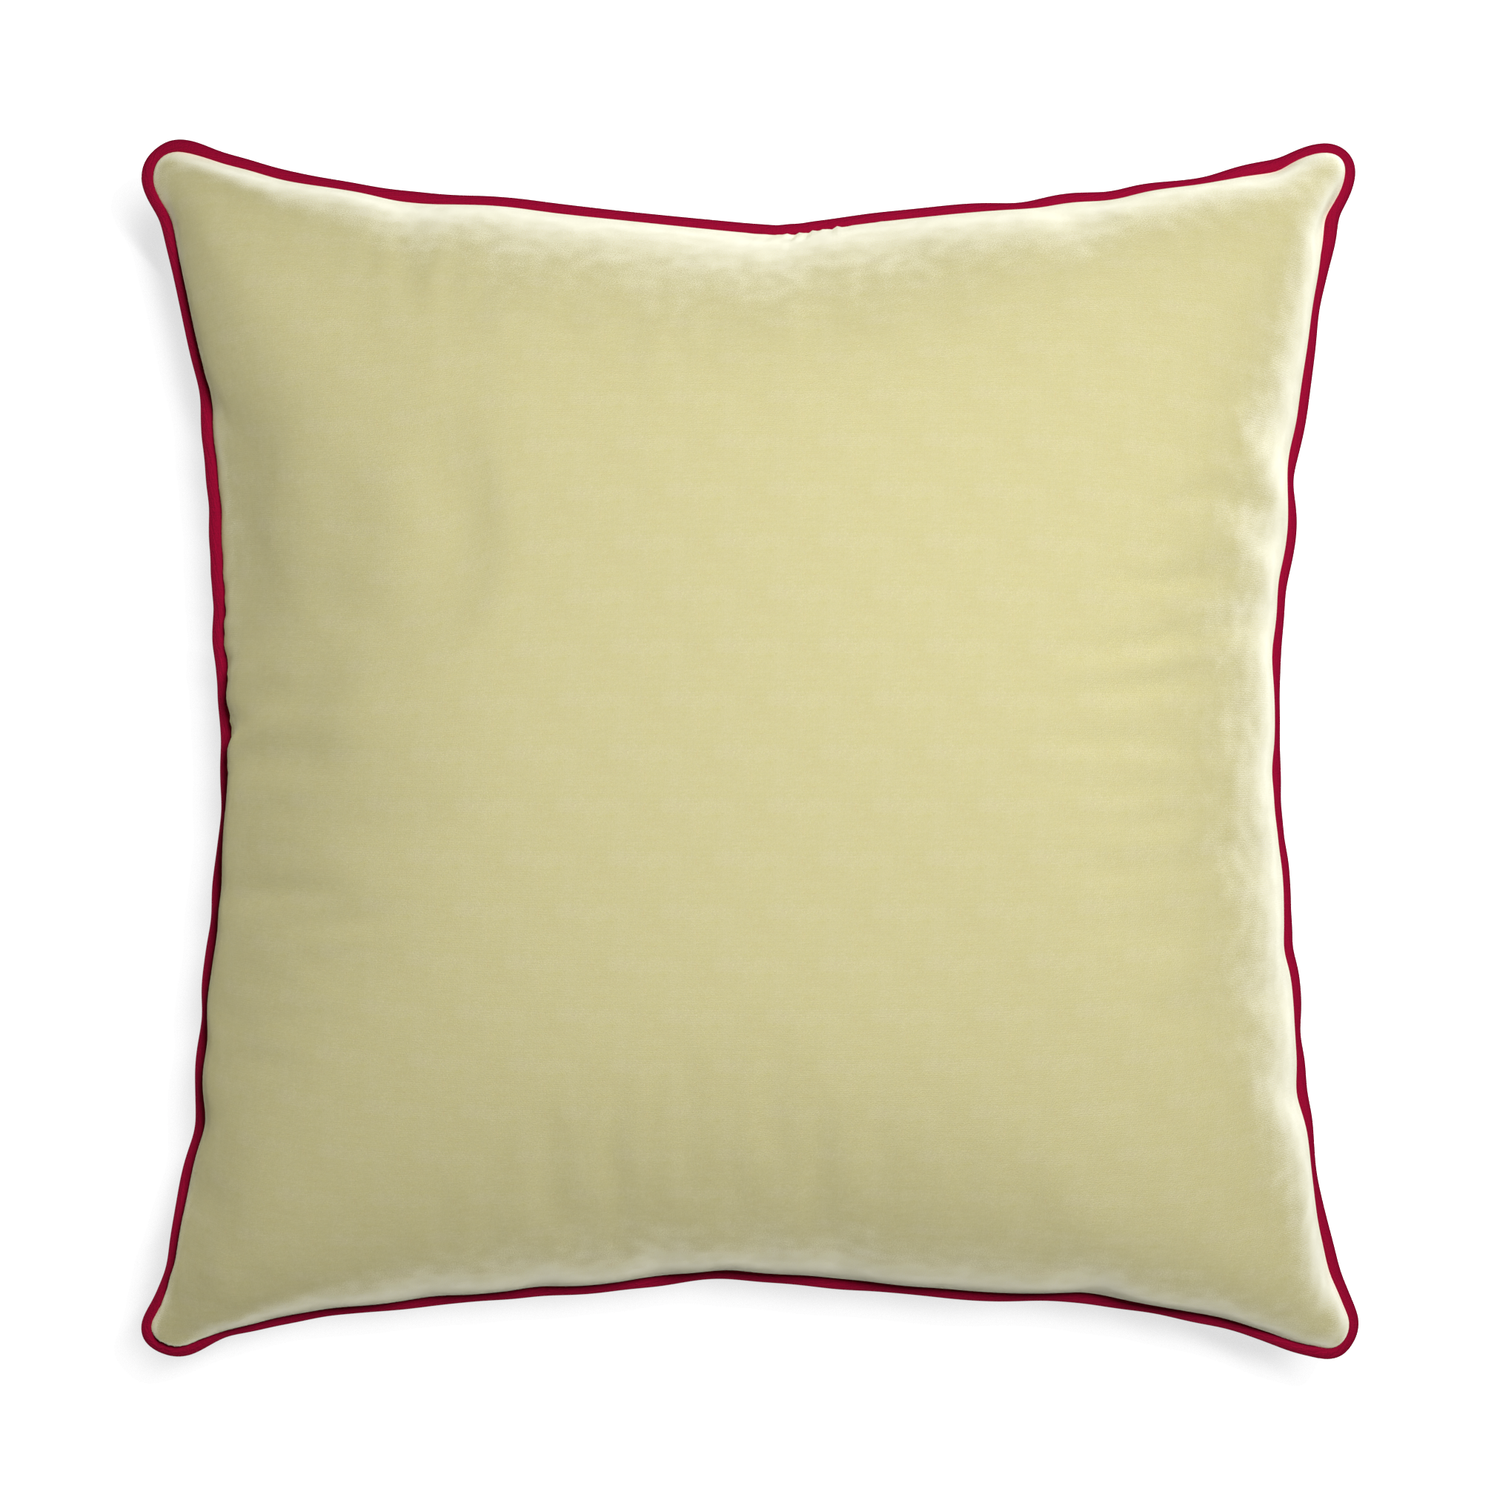 square light green velvet pillow with dark red piping